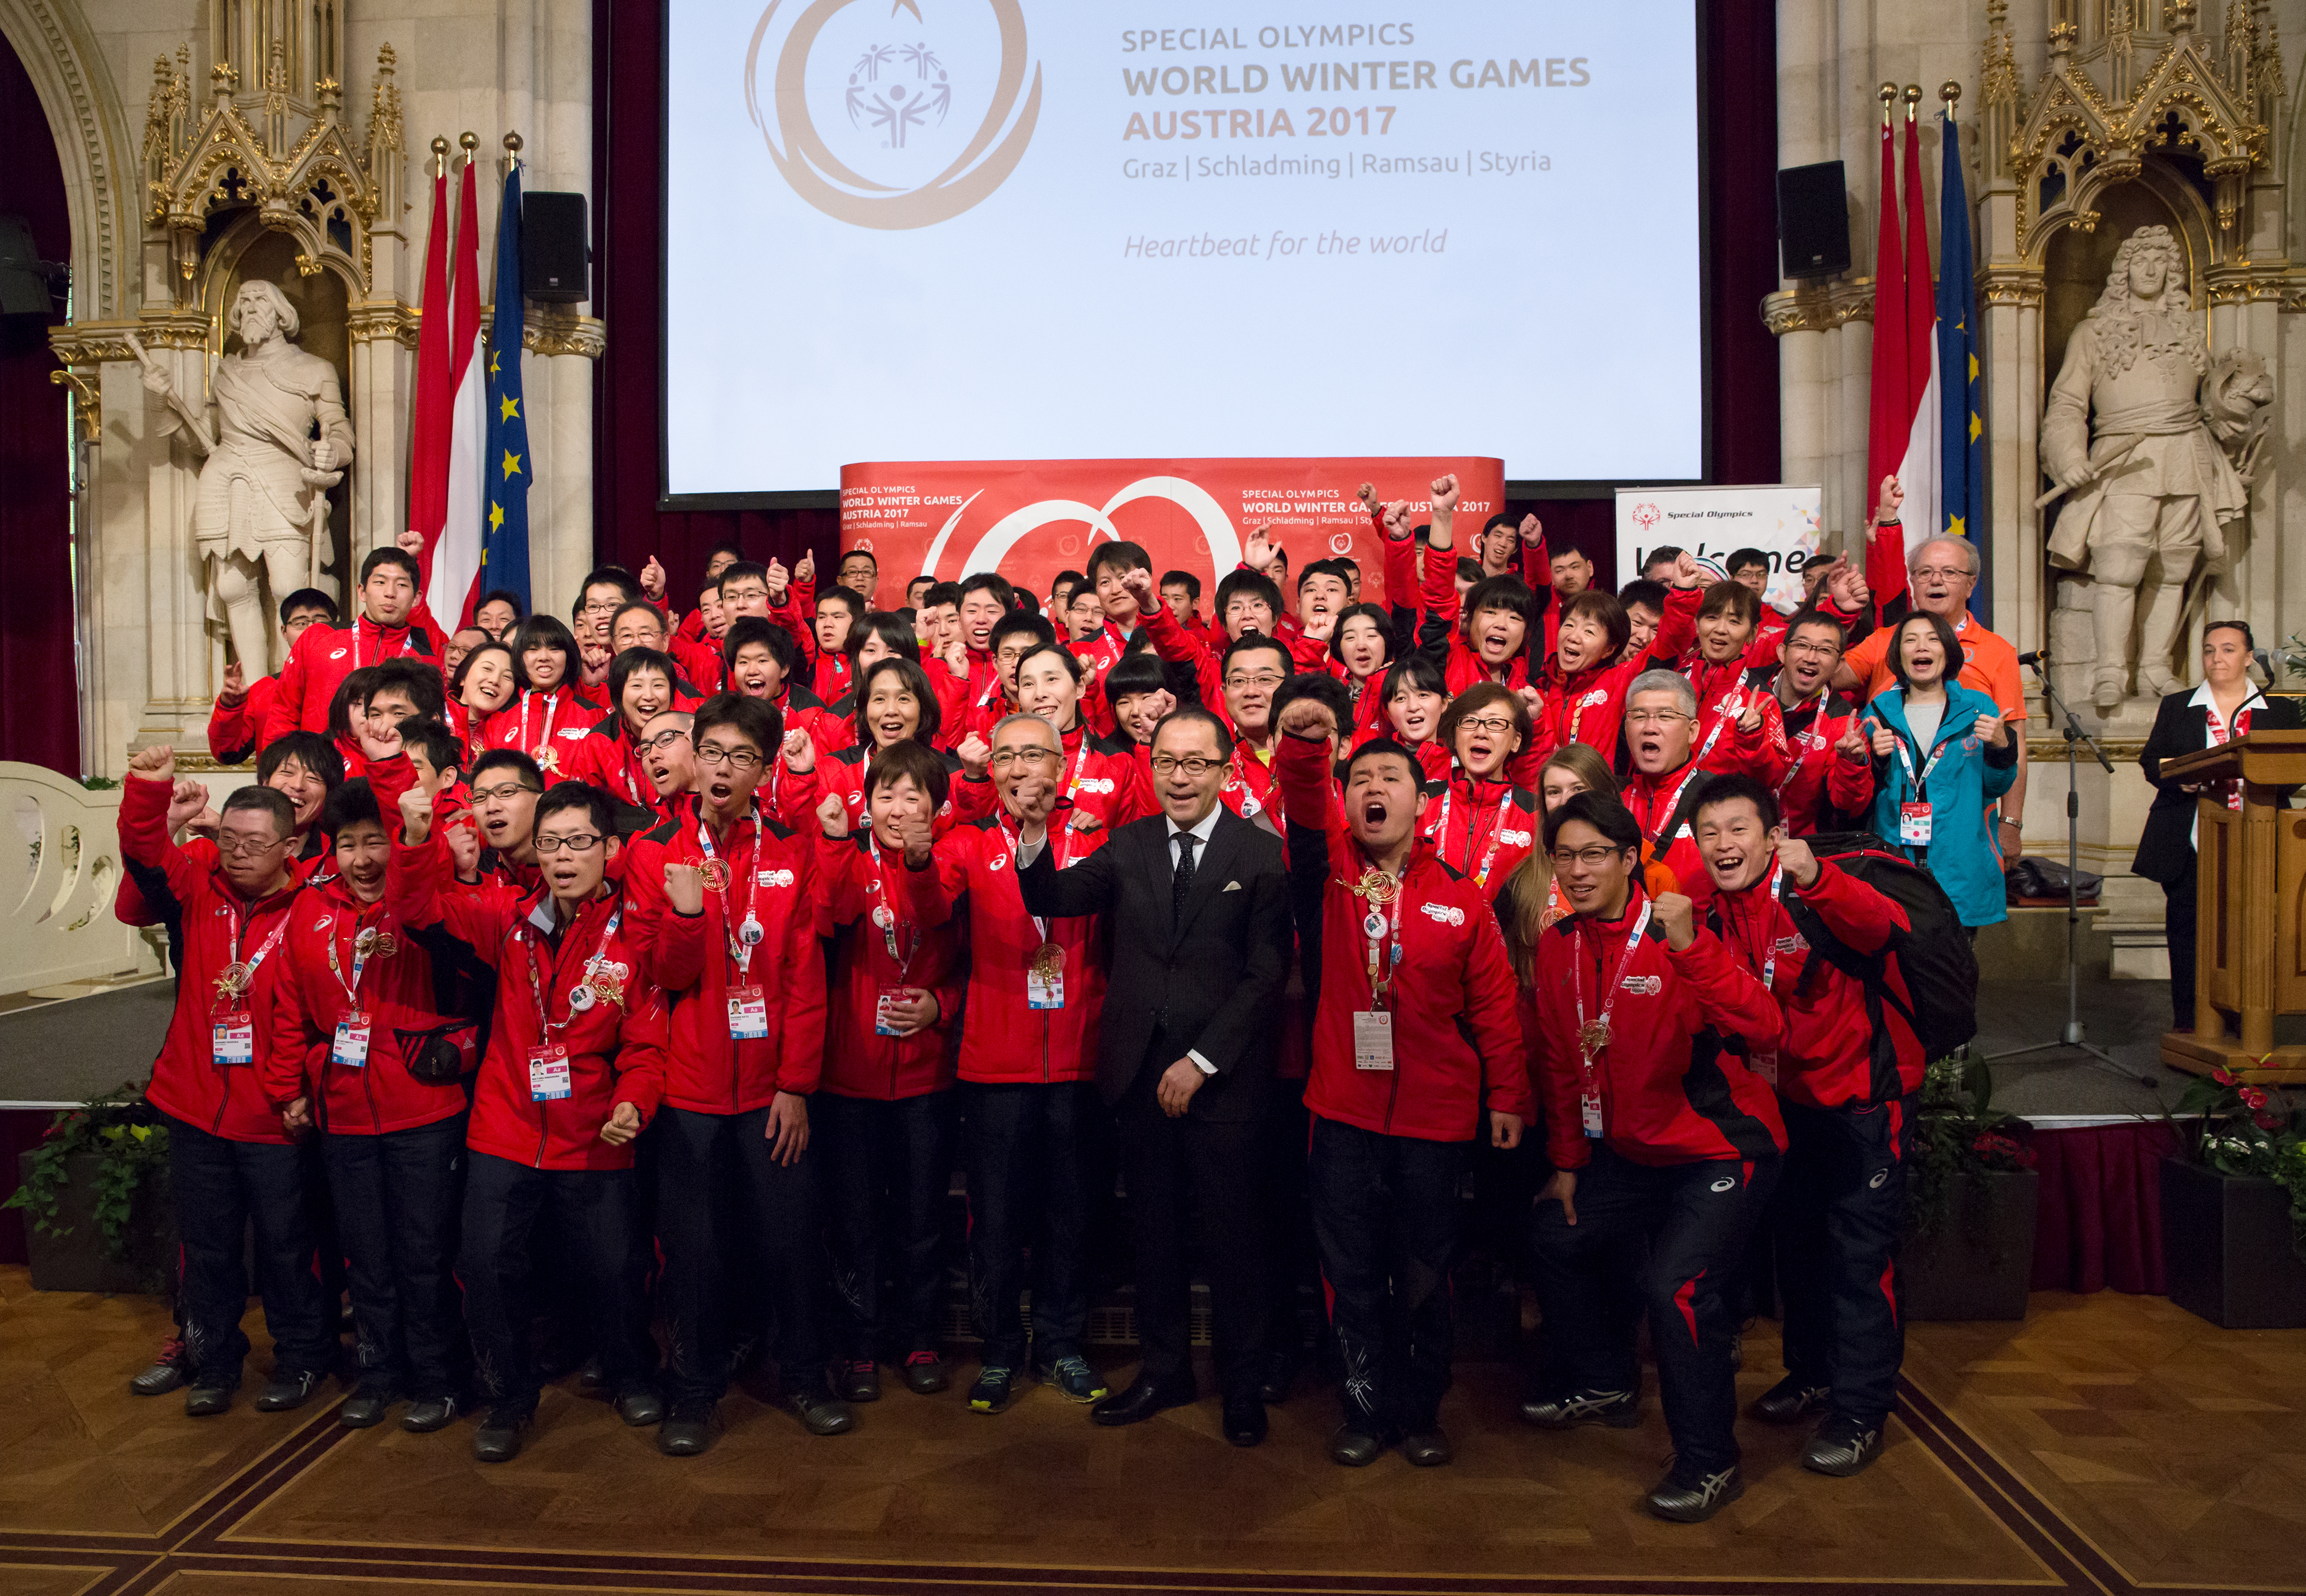 Special Olympics World Winter Games 2017 reception Vienna - Japan